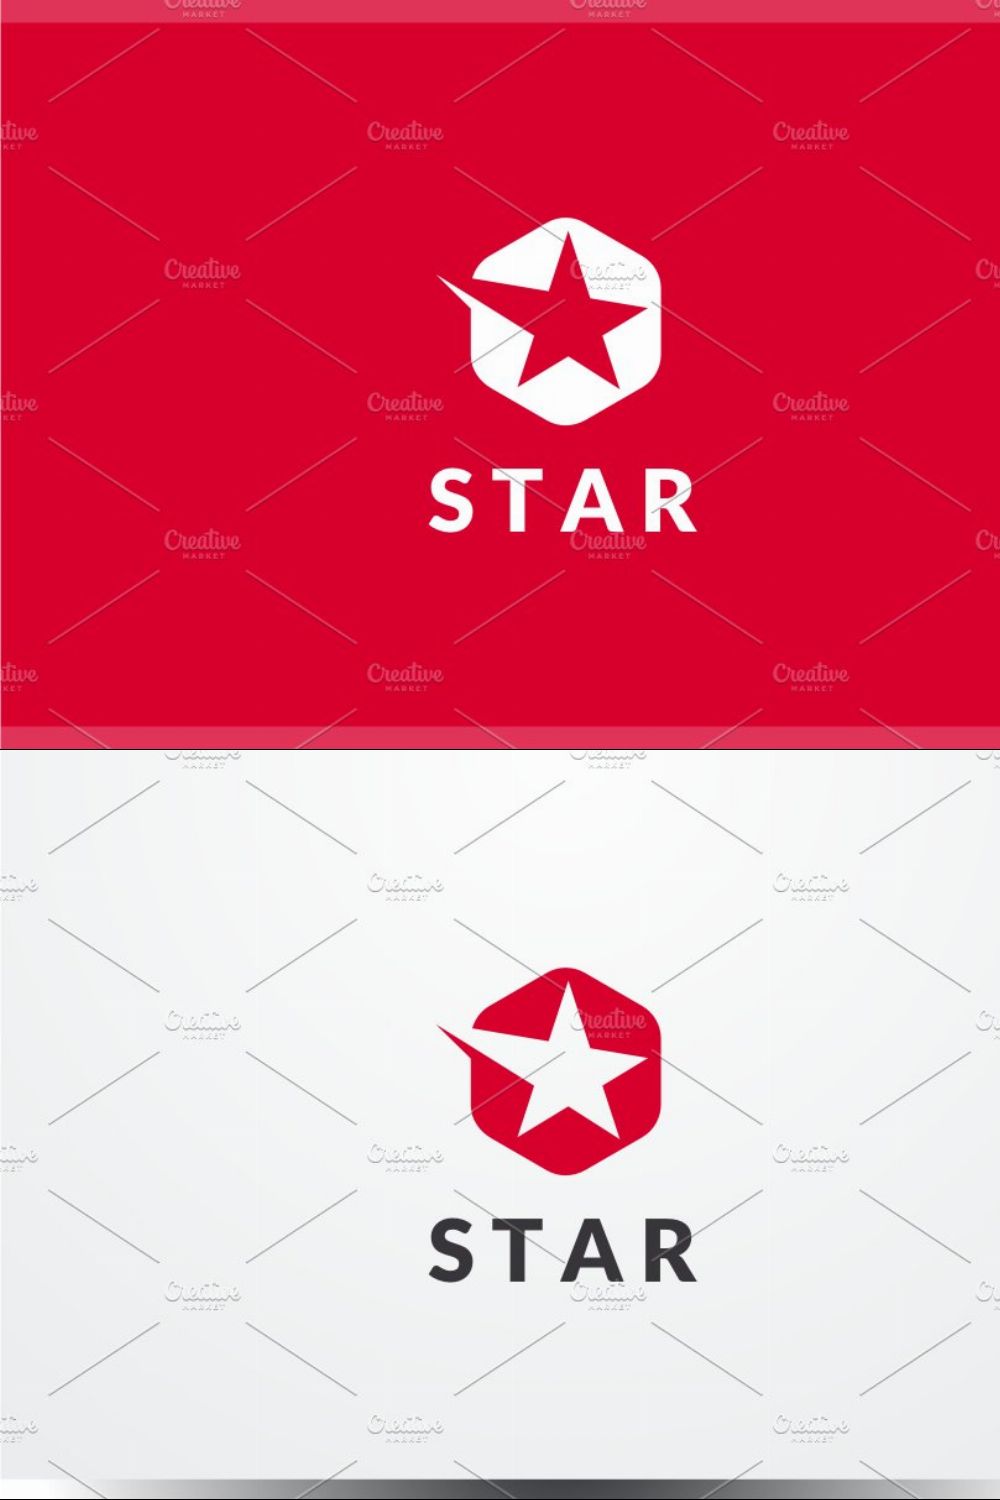 Star Logo pinterest preview image.